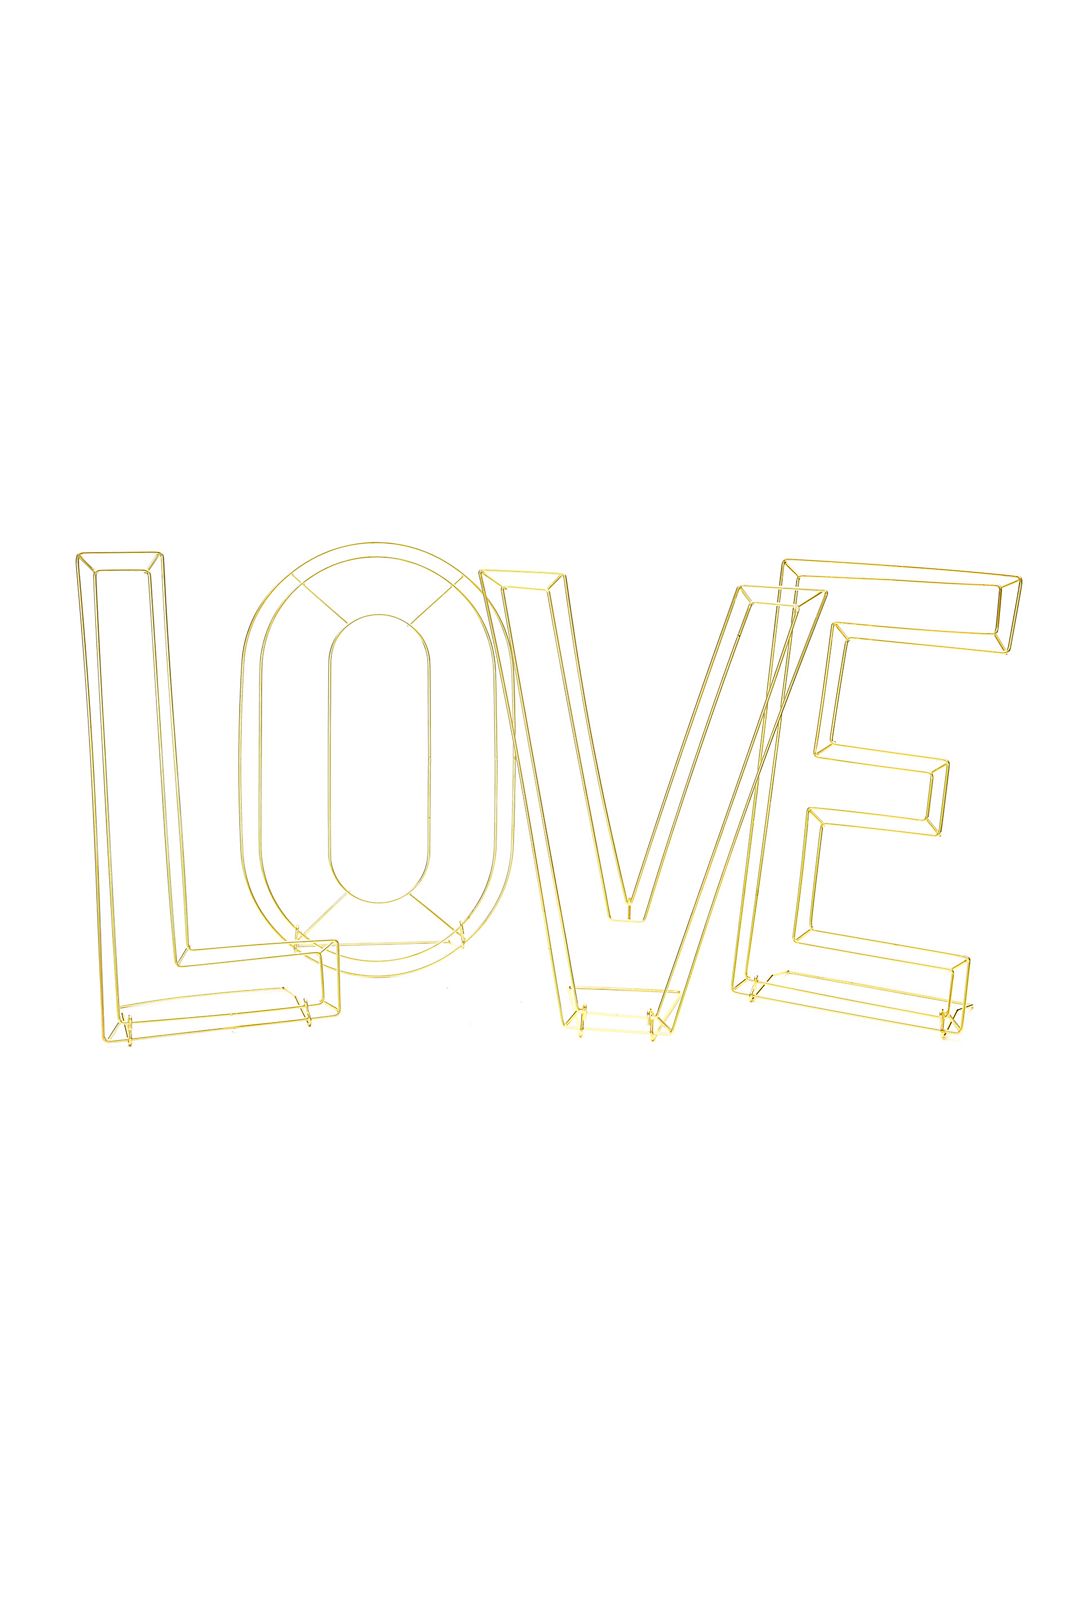 Wire Love Decor Letters Image 1